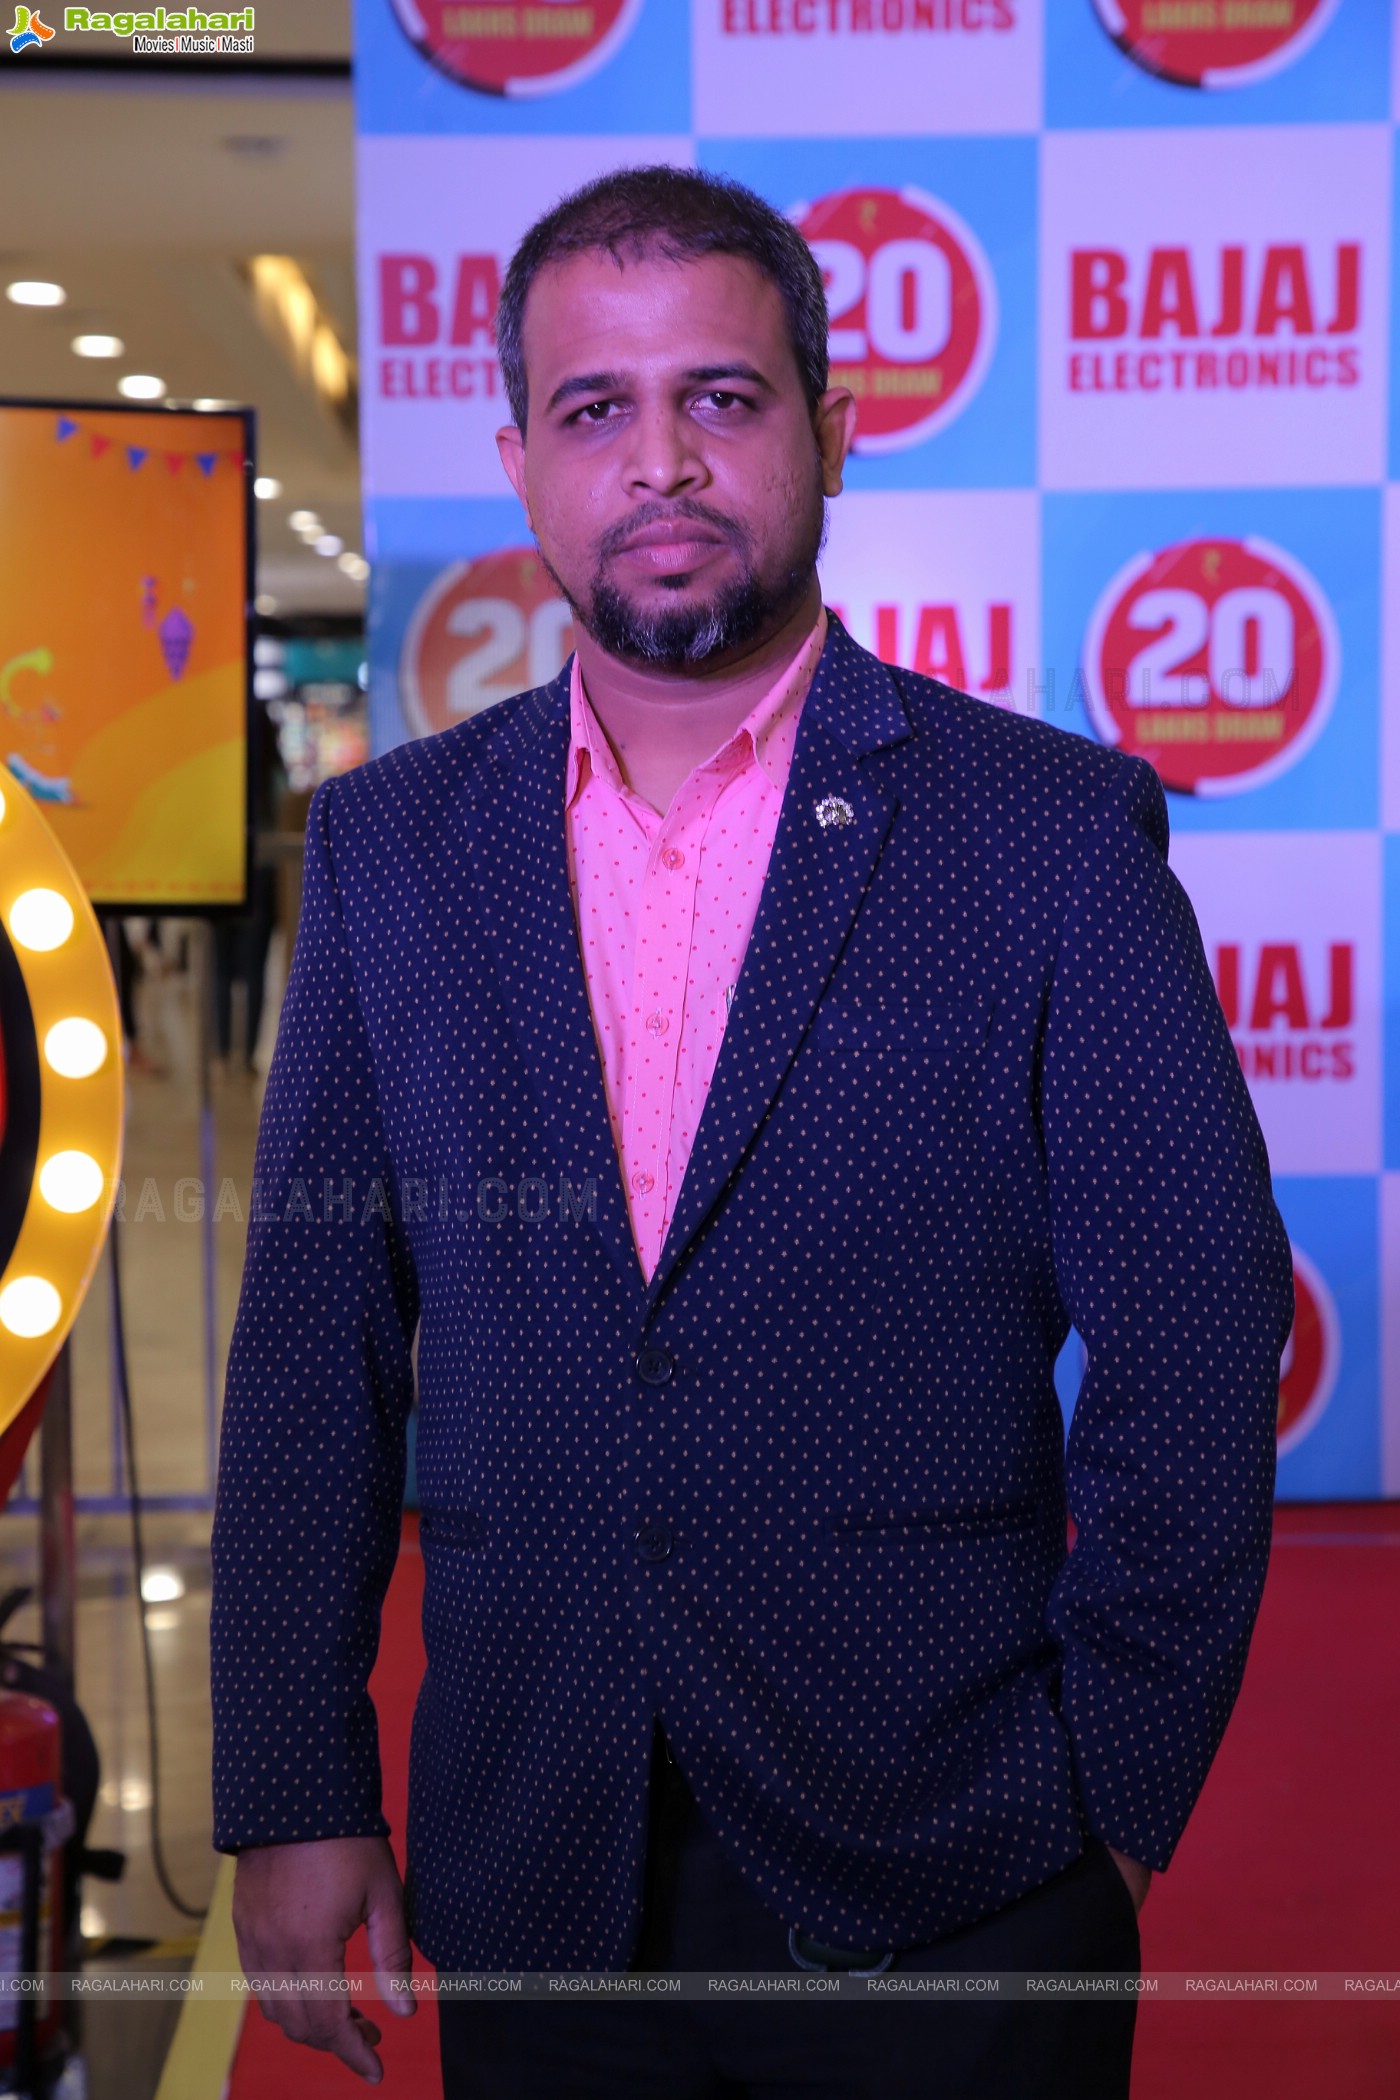 Bajaj Electronics Announces 20 Lakh Cash Draw Winner at Nexus Mall, Hyderabad